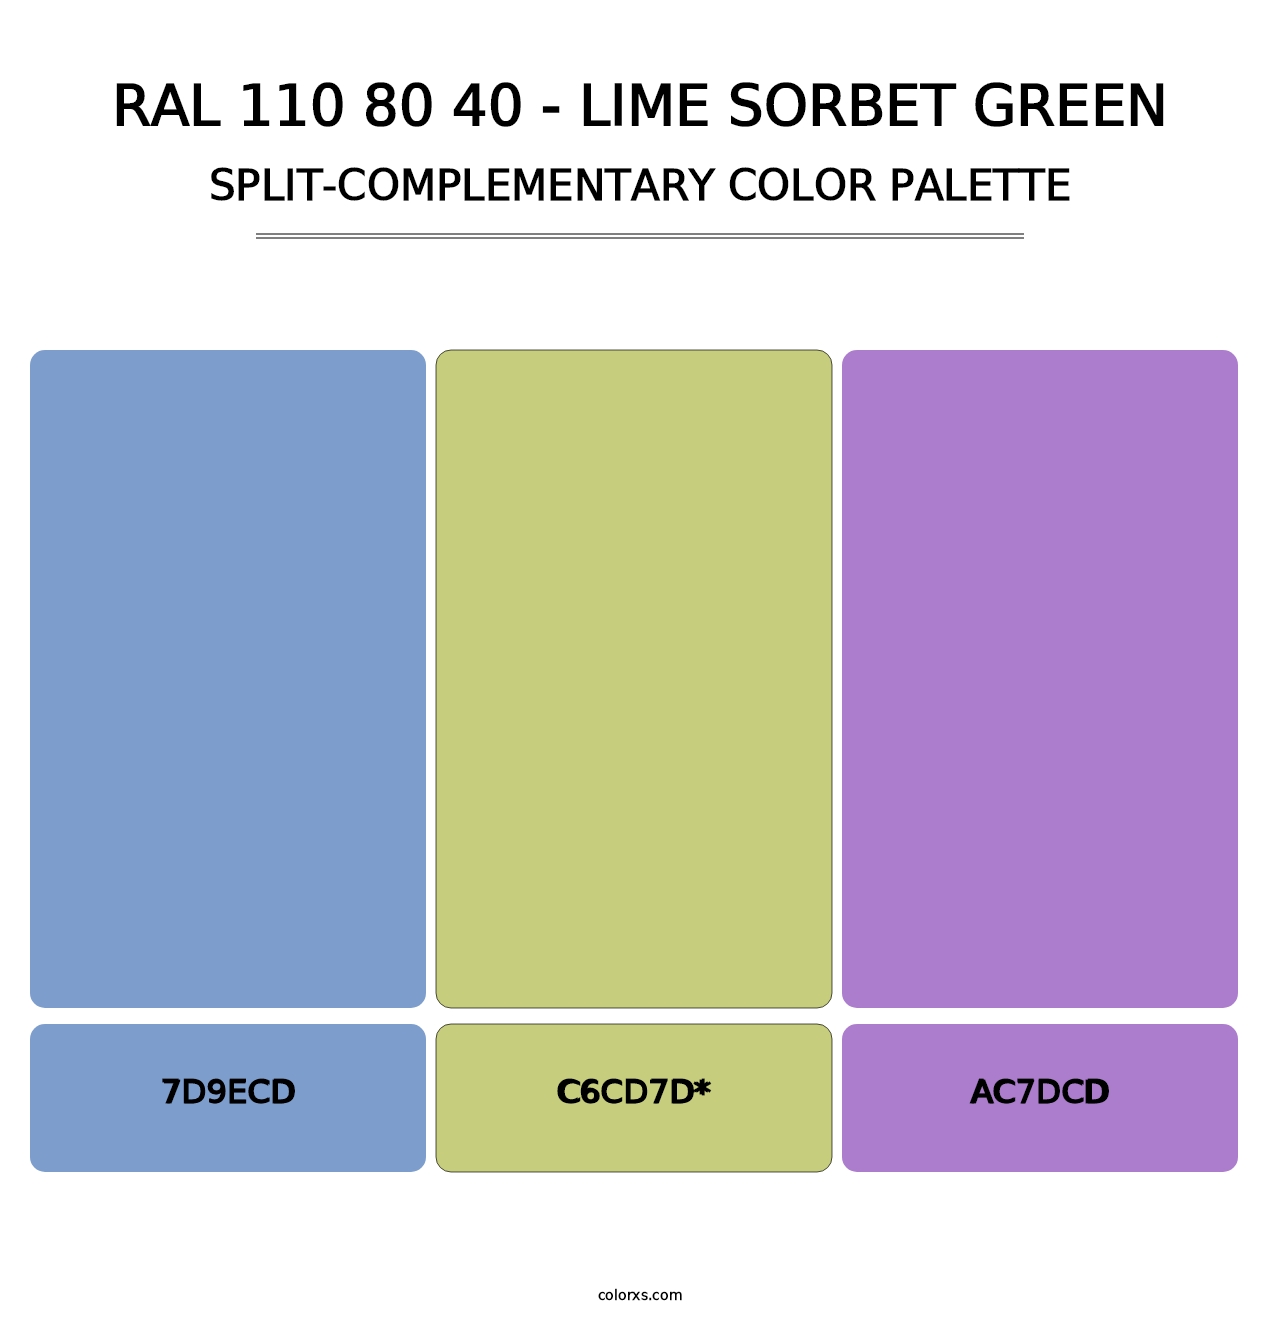 RAL 110 80 40 - Lime Sorbet Green - Split-Complementary Color Palette